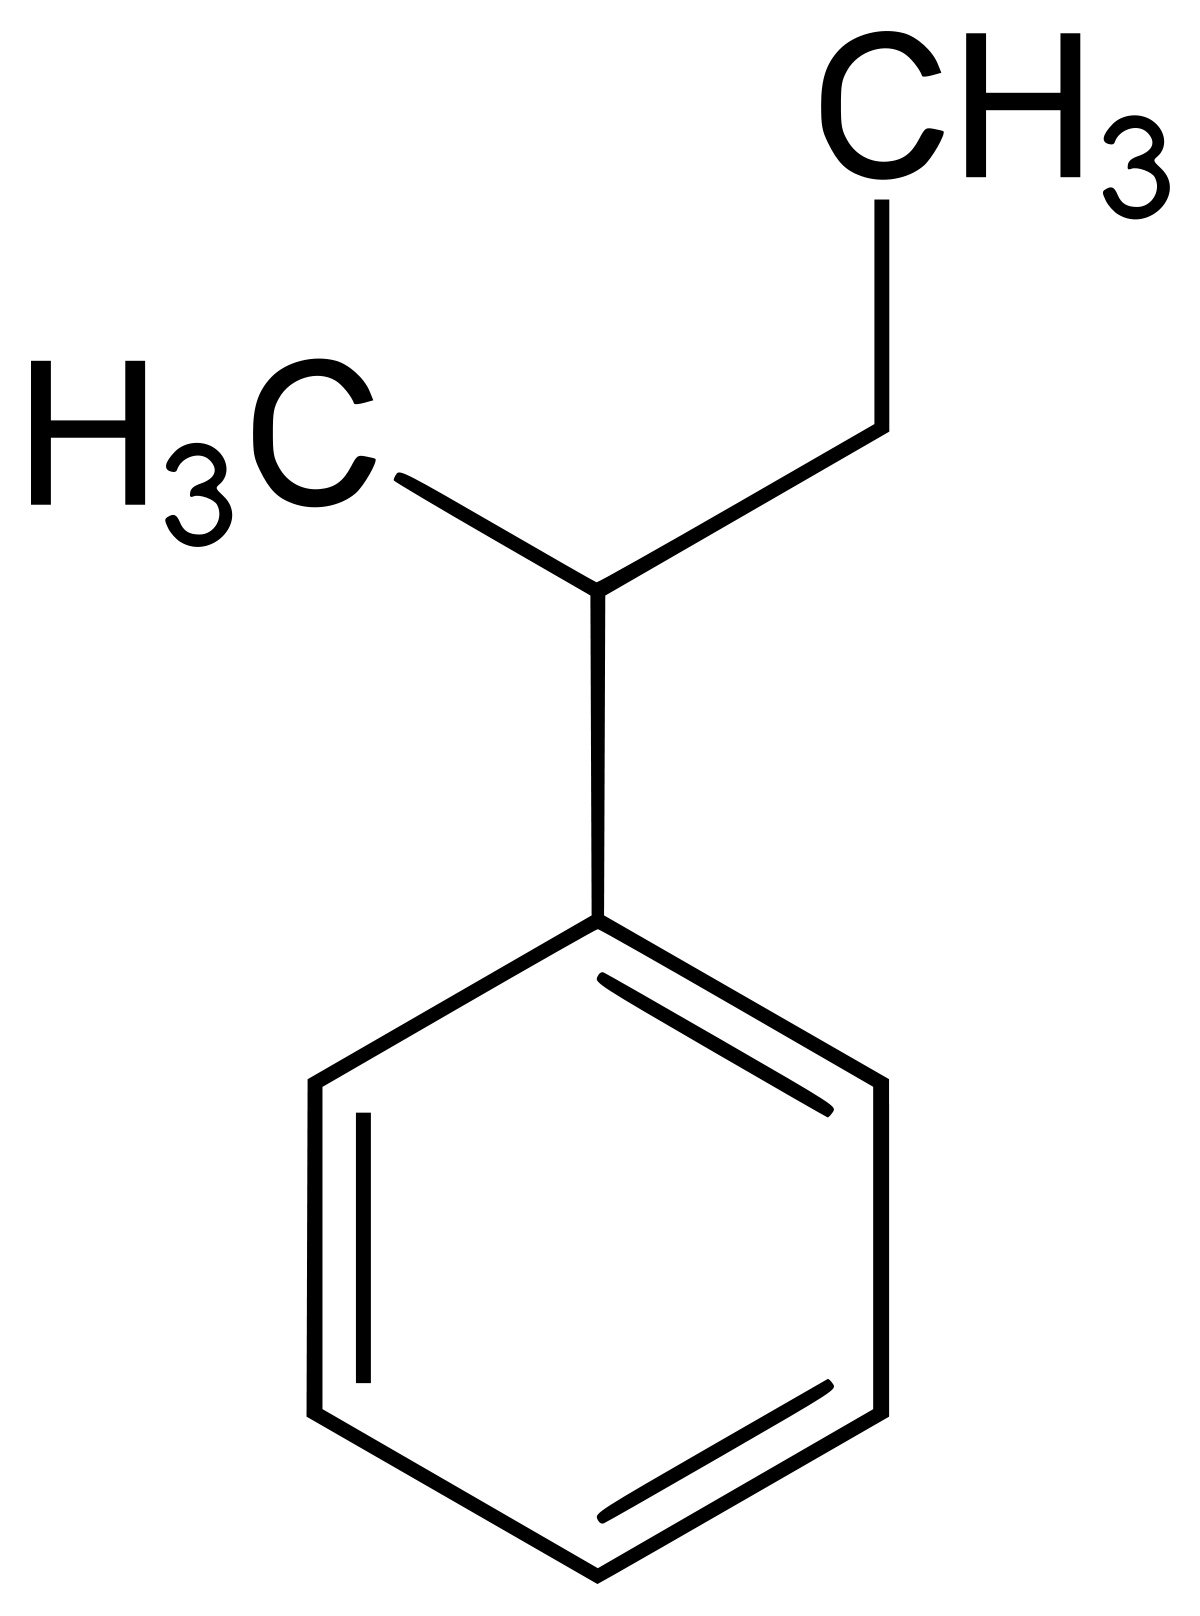 Sec Butyl Benzene (Secondary Butyl Benzene) (SBB) - CAS 135-98-8